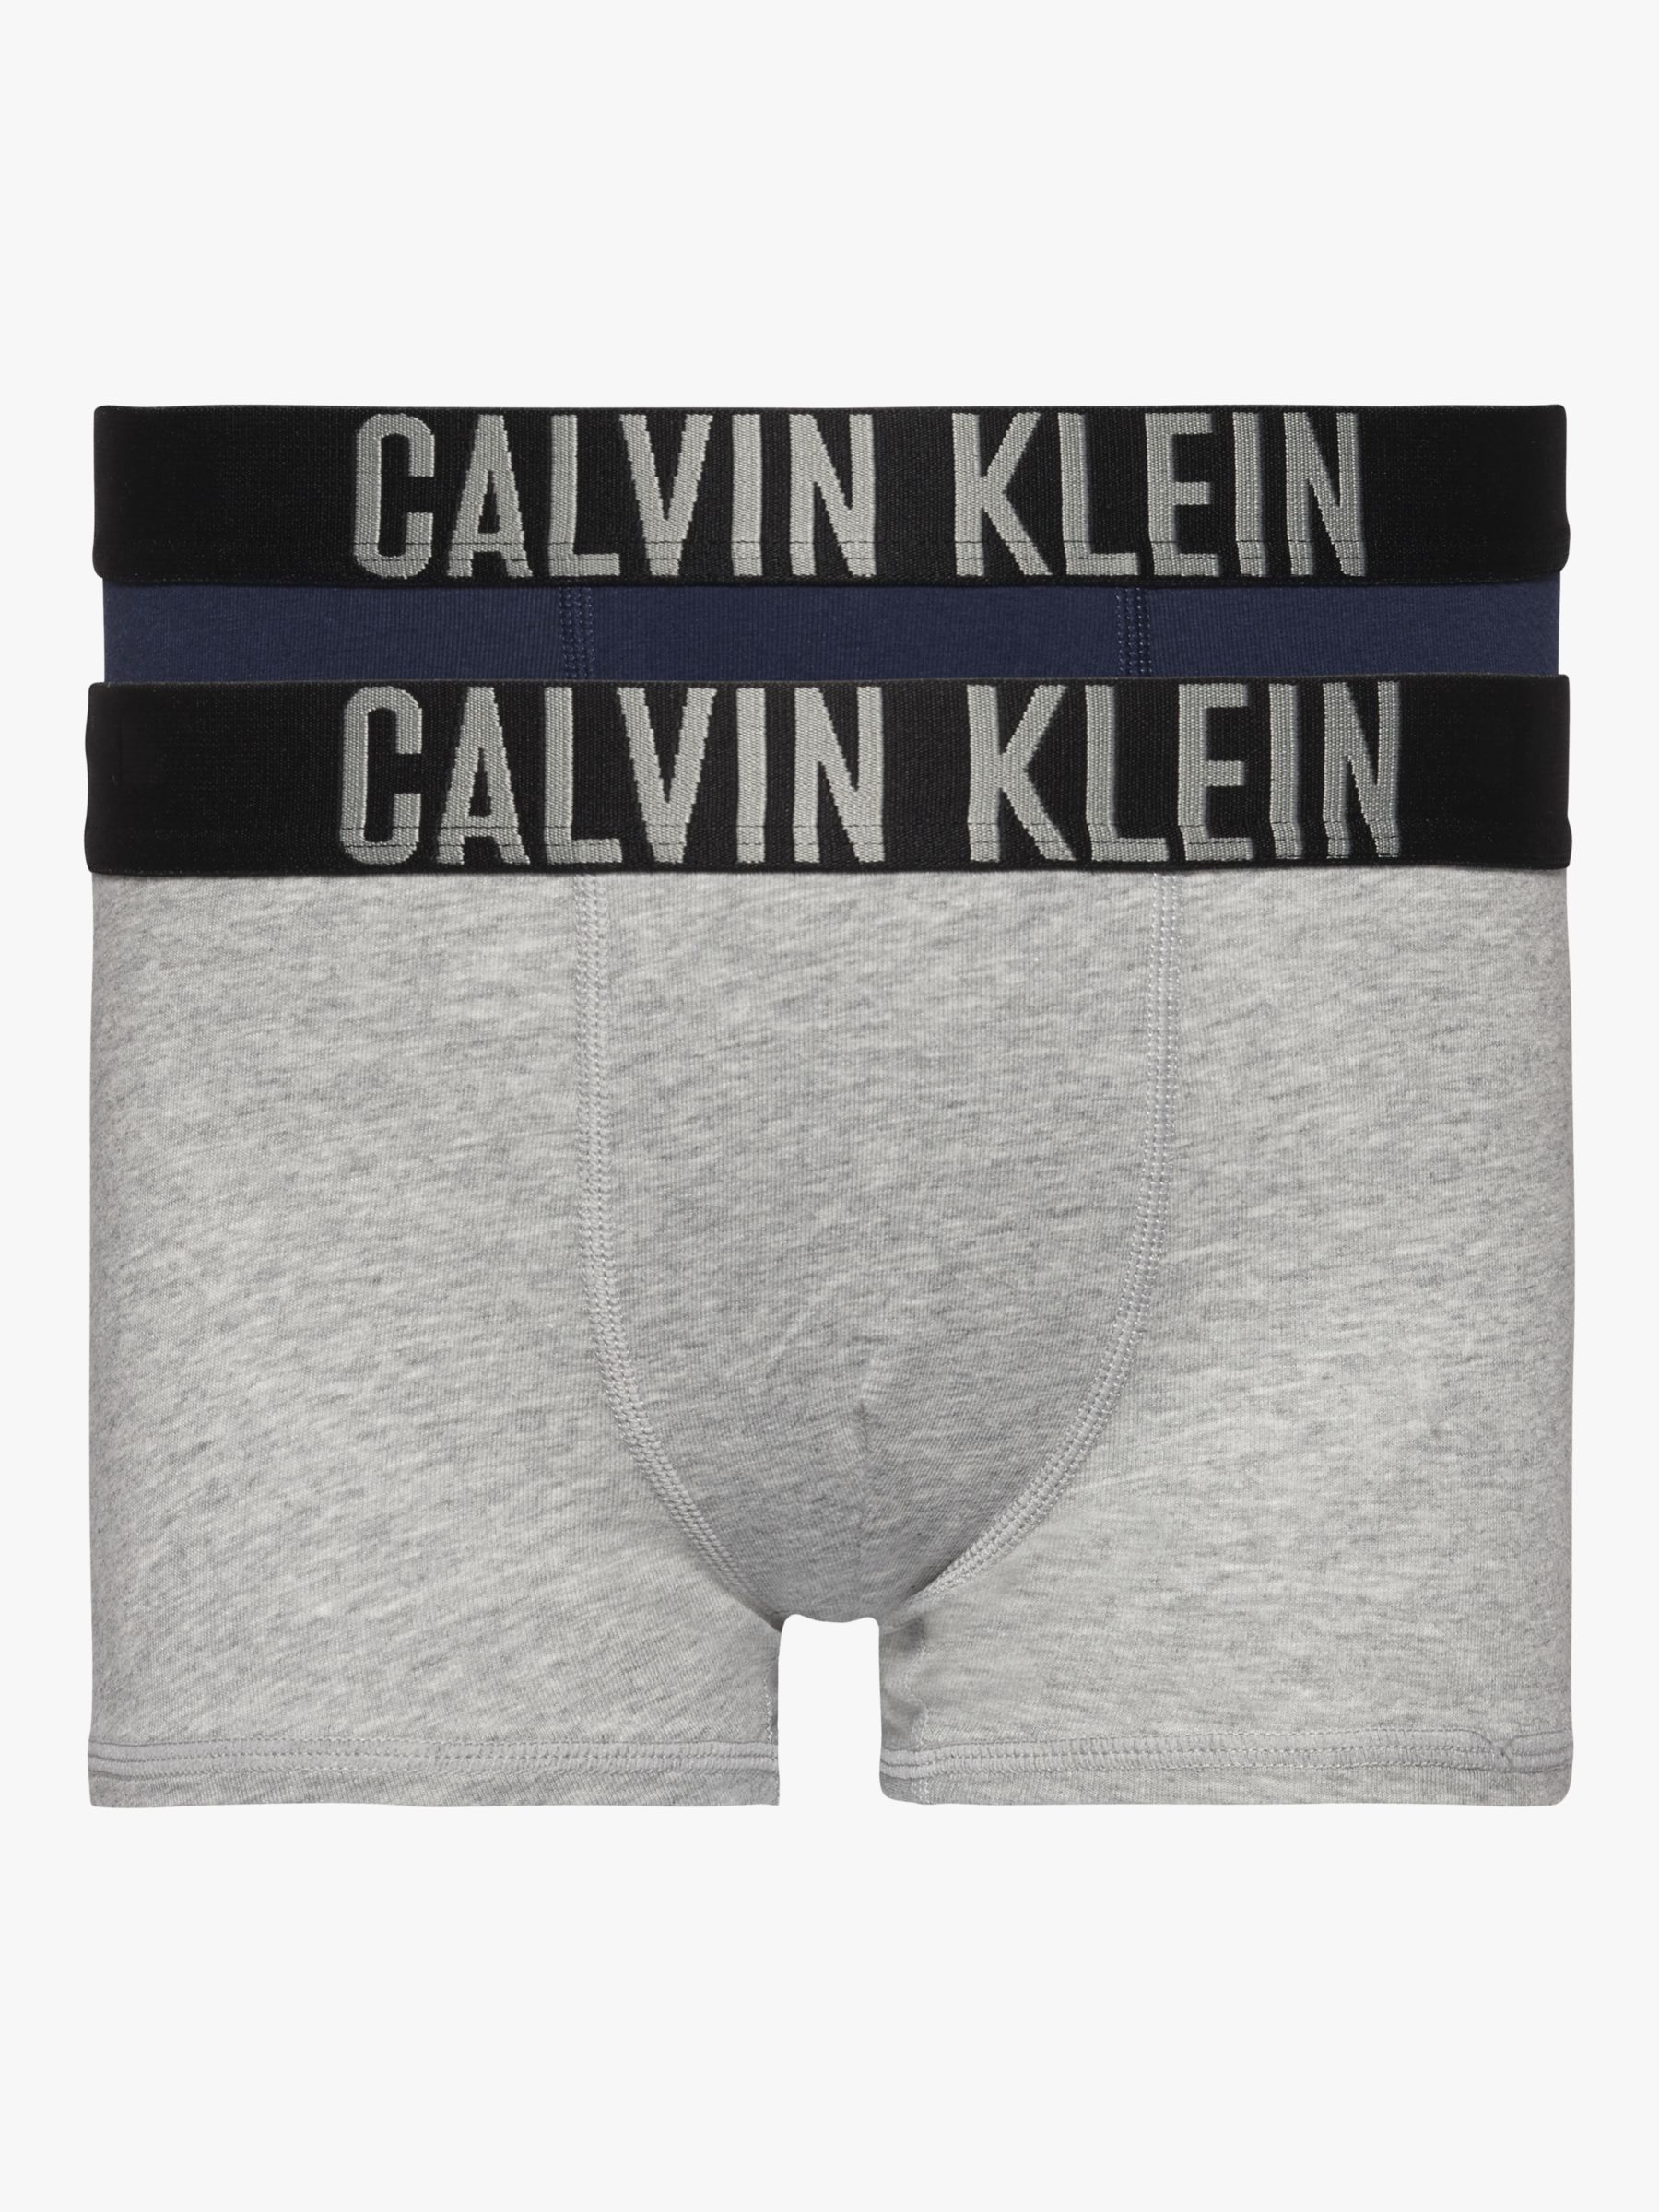 Calvin Klein Kids' Trunks, Pack of 2, Grey/Blue at John Lewis